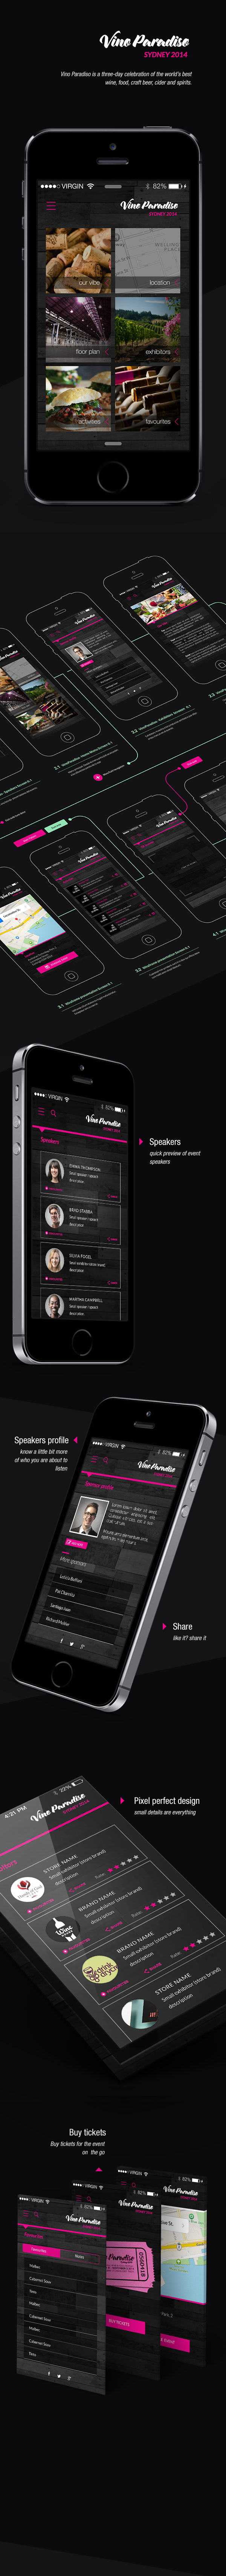 UX design ui design Exhibition App Vino Paradiso ios android mobile design user experience